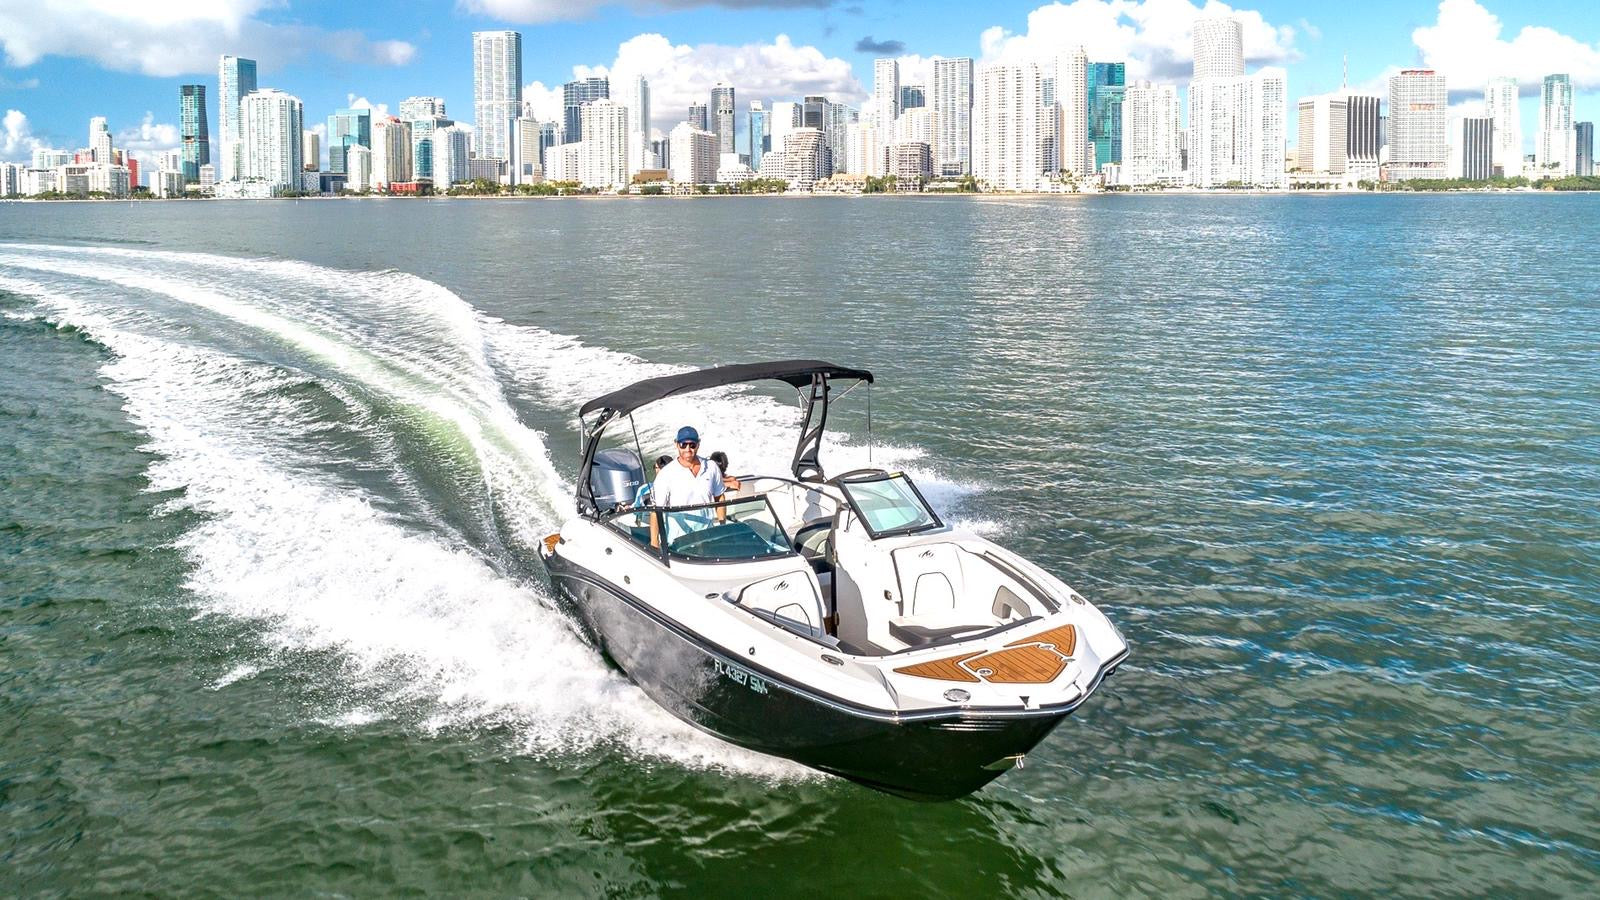 Vip Boat Rental Miami | Luxury Boat rentals in Miami | Luxury Yacht rental Miami – Miami VIP Boat rental